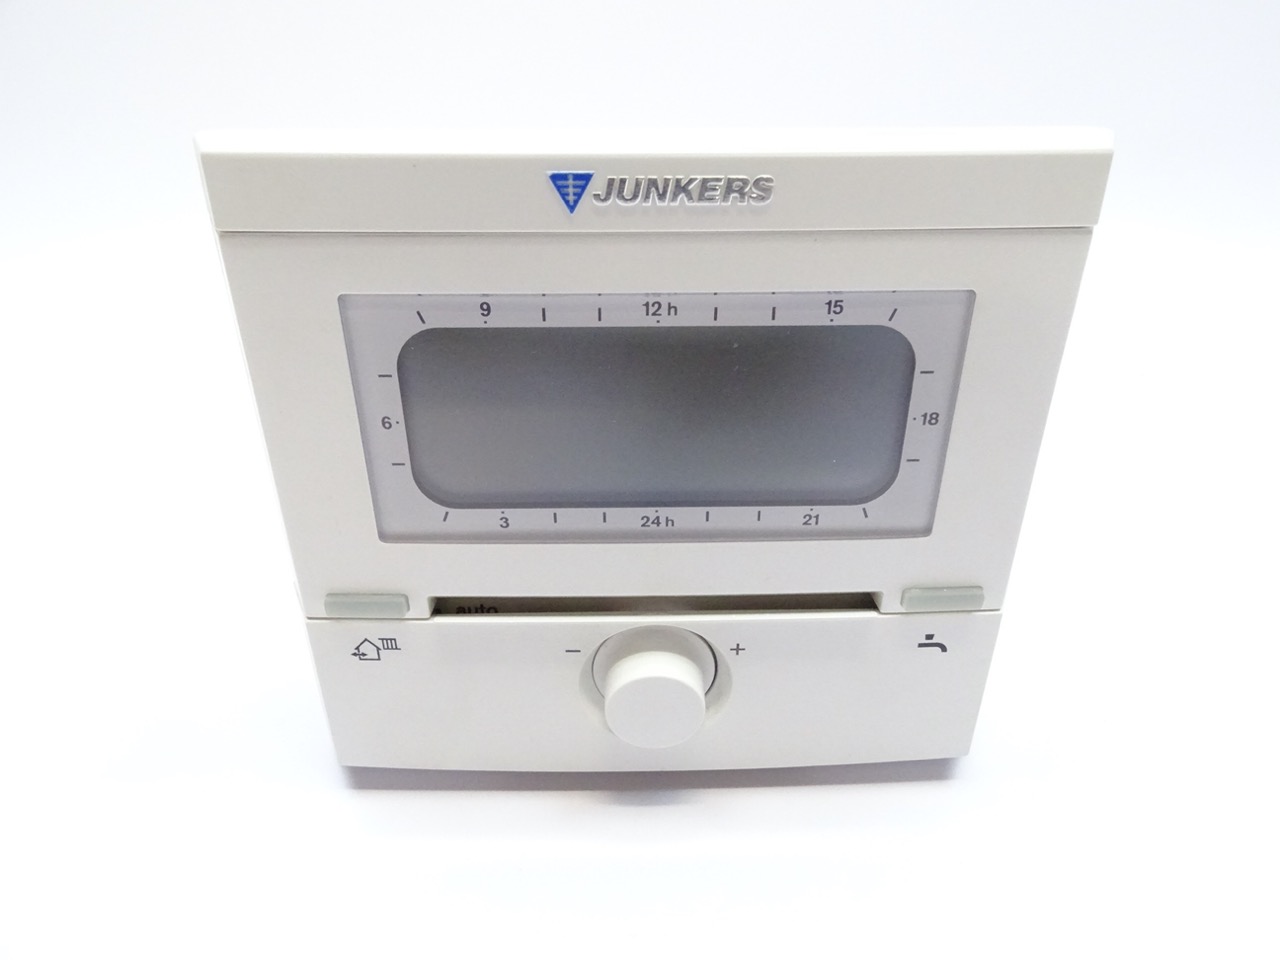 Junkers Bosch FR120 Raumtemperaturregler Thermostat Steuerung